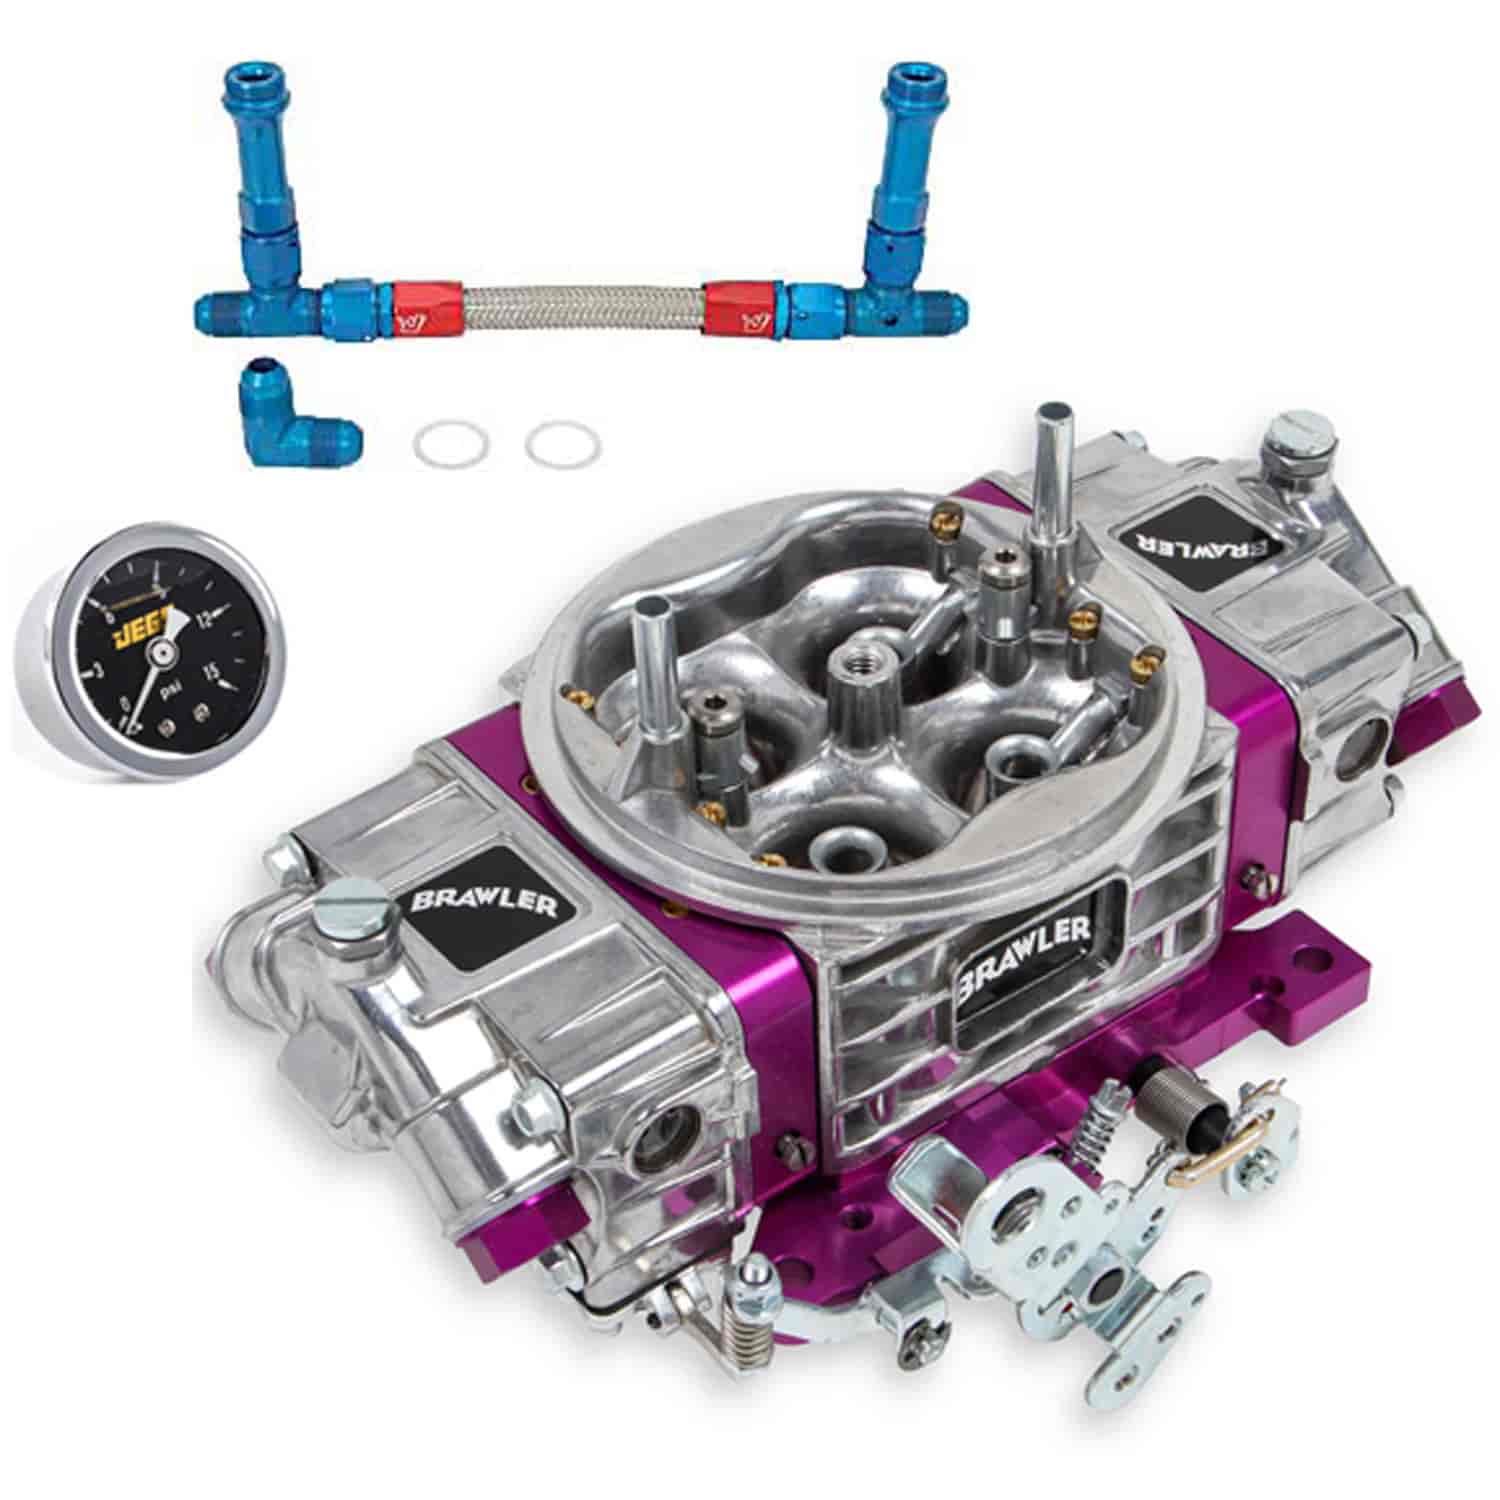 Brawler Race Mechanical Secondary Carburetor Kit 750 CFM